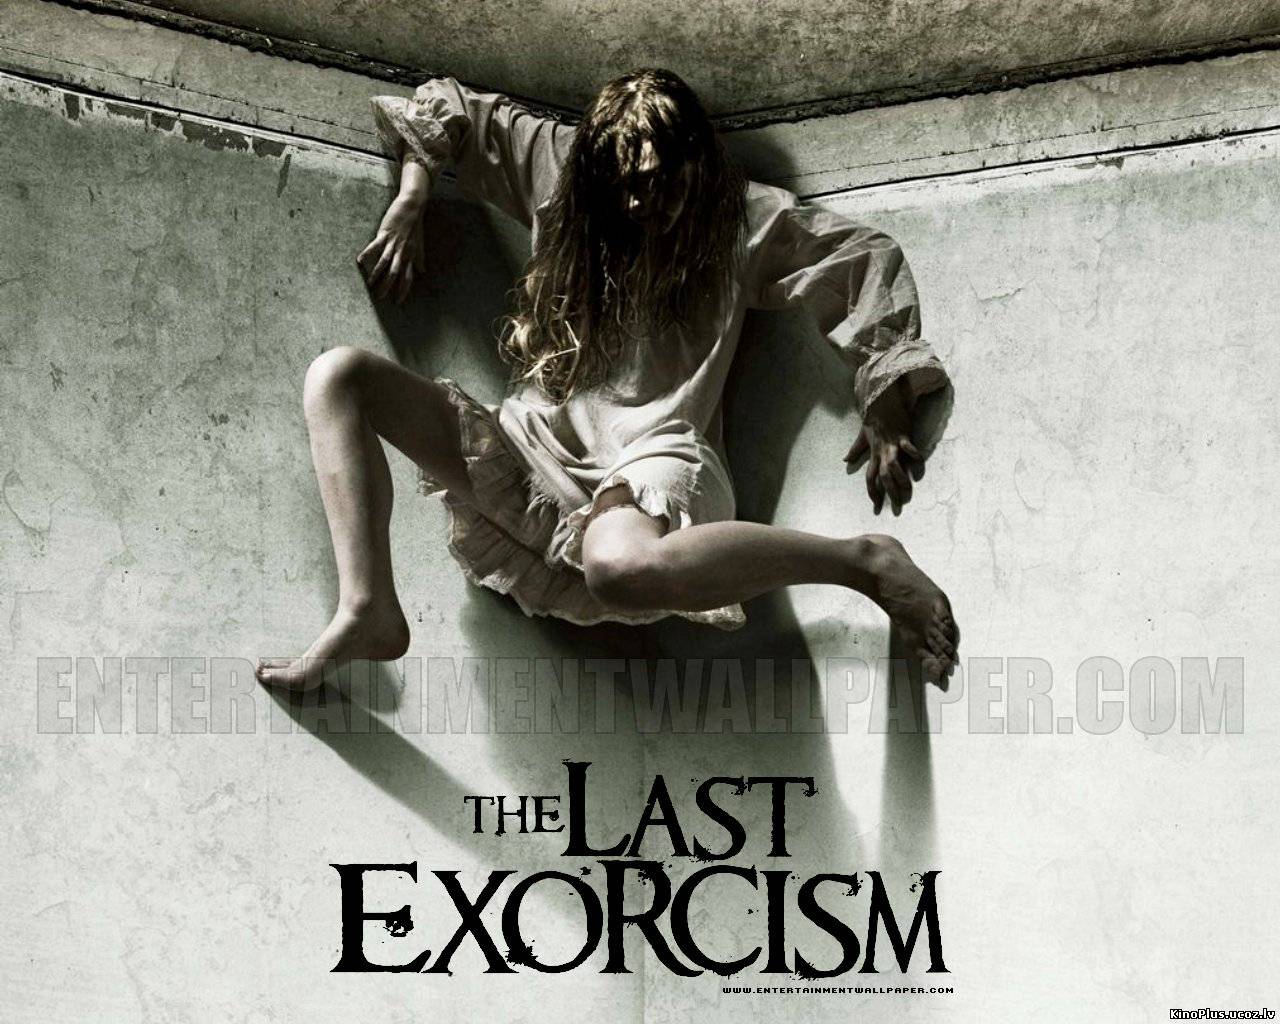 Pēdējais eksorcisms / Последнее изгнание дьявола / The Last Exorcism (2010/RUS)